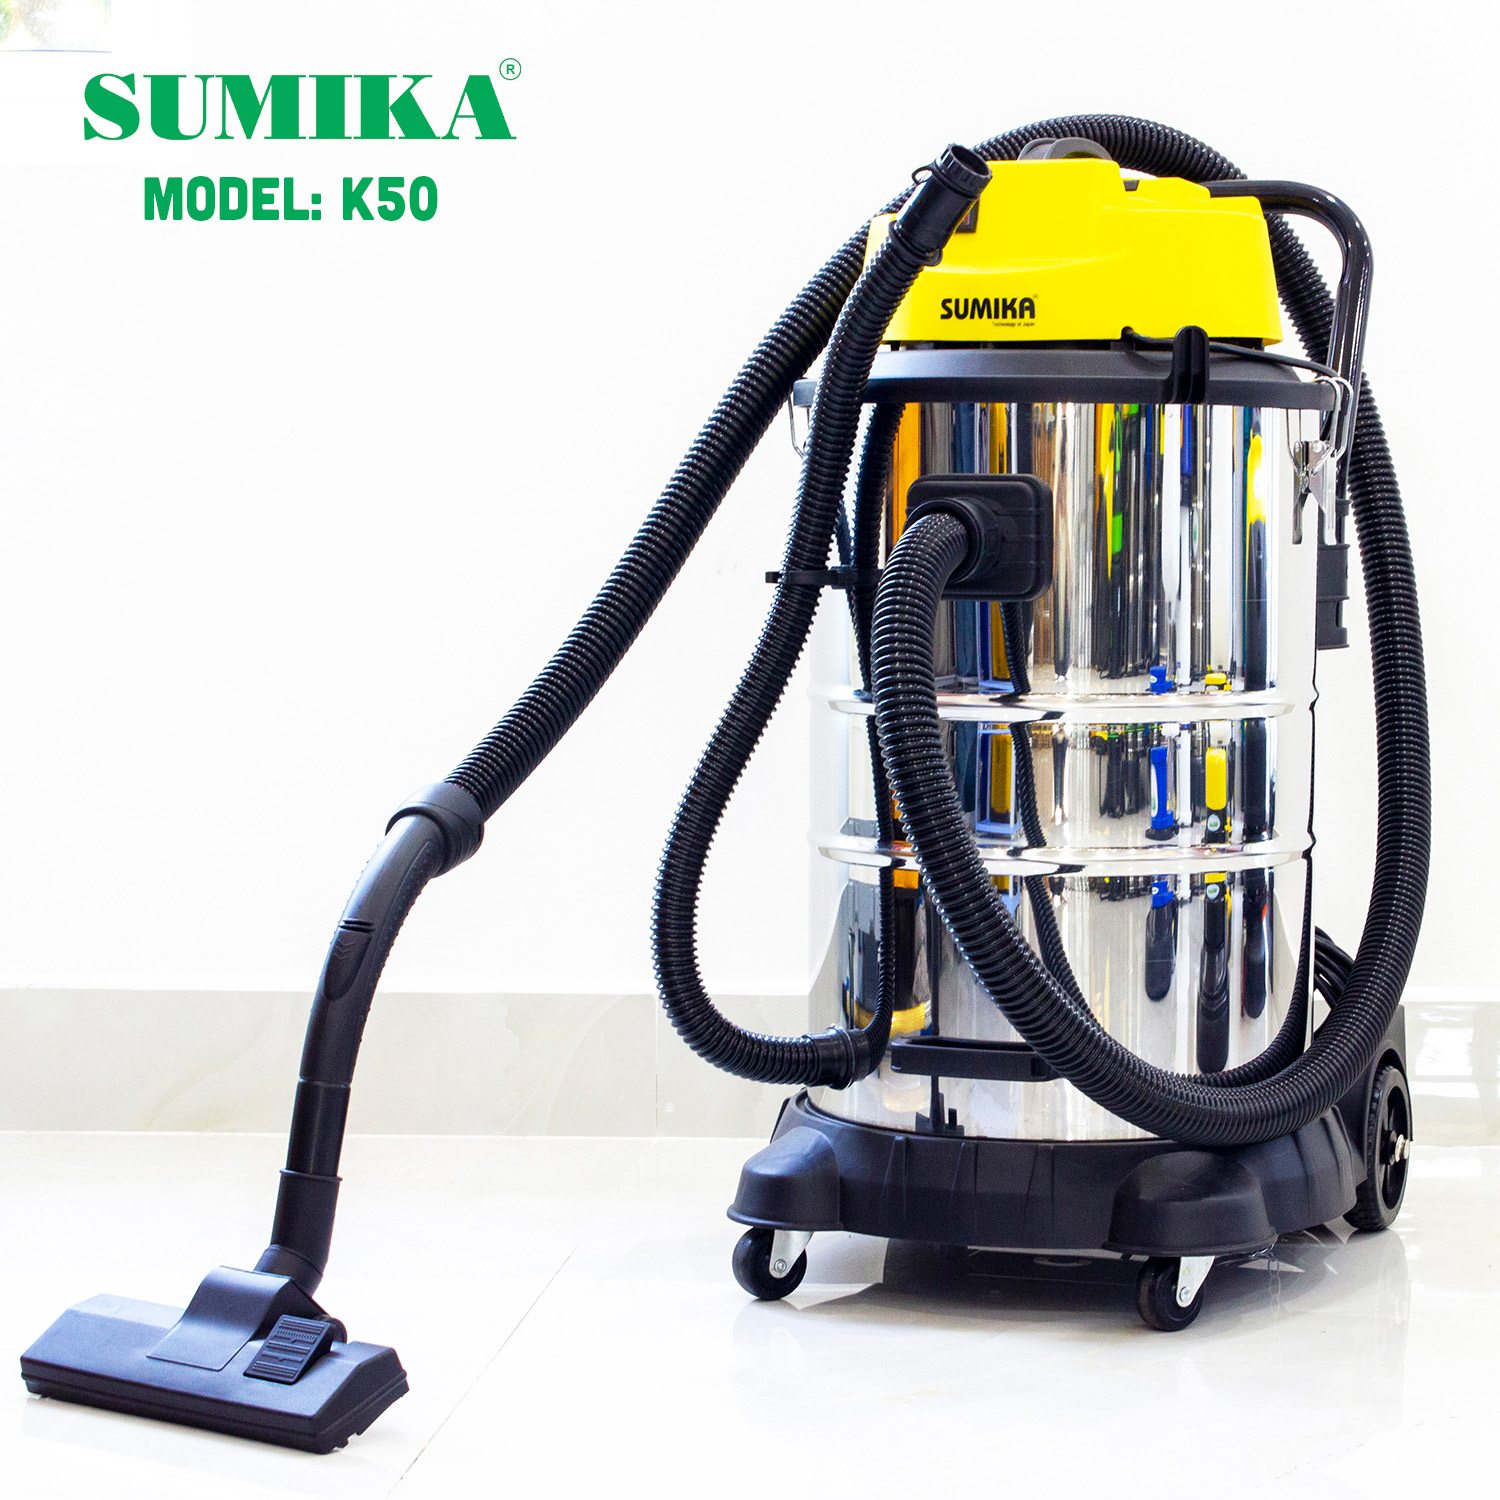 Sumika K50 - 1800W industrial vacuum cleaner